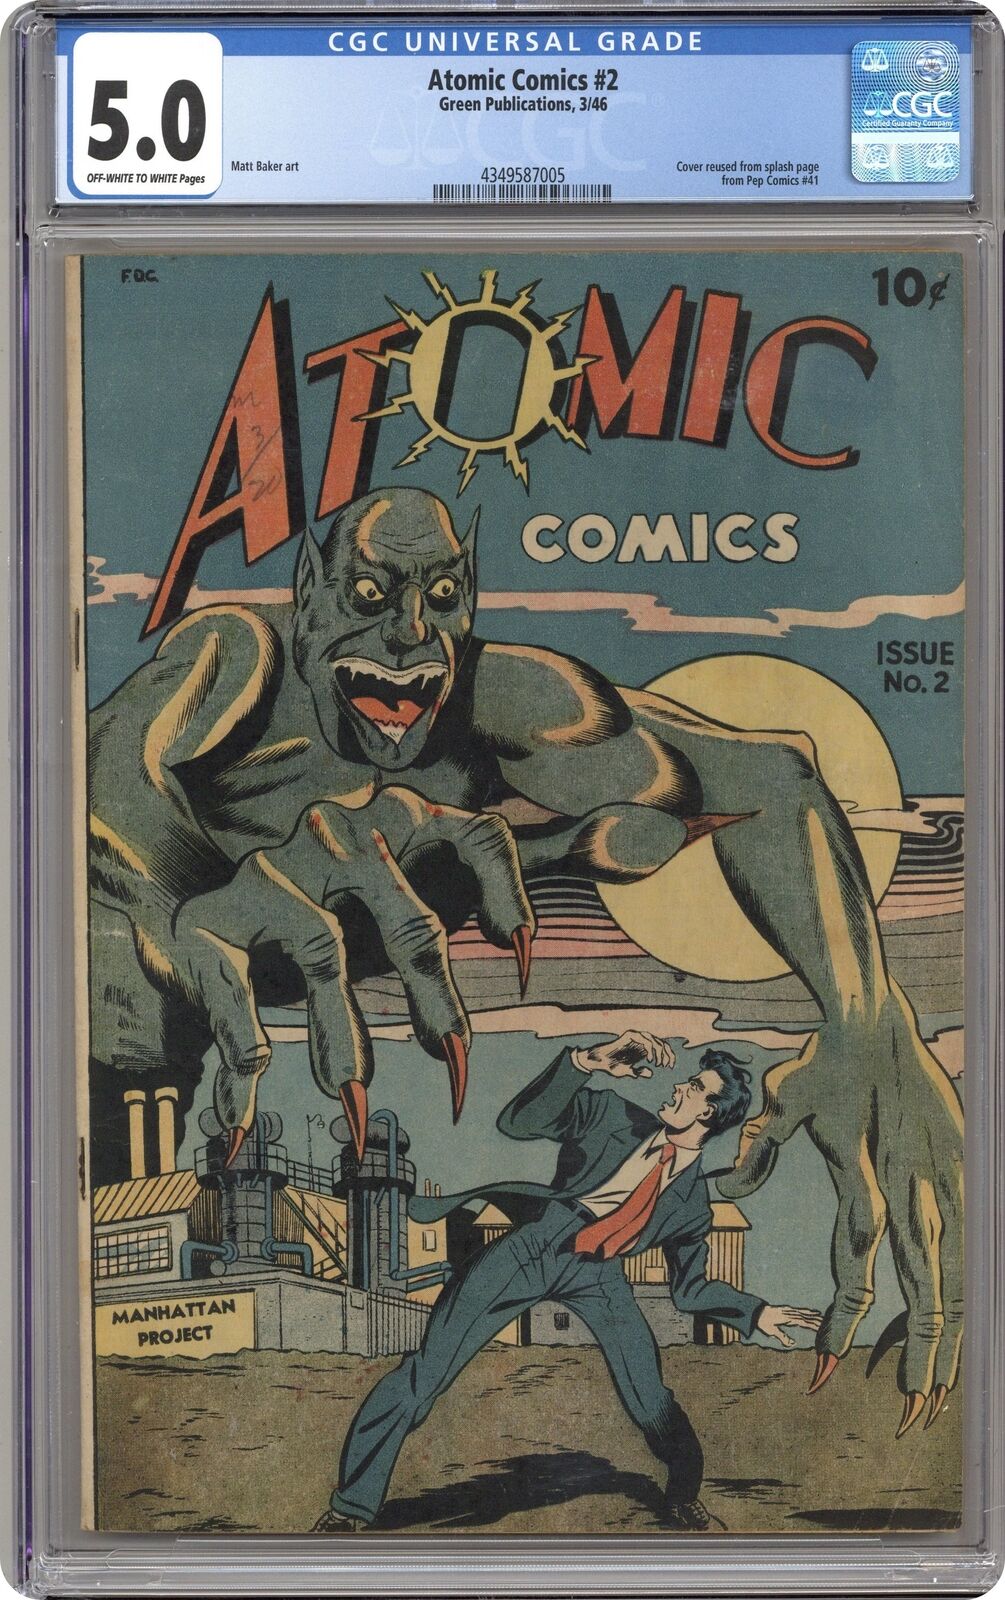 Atomic Comics #2 CGC 5.0 1946 4349587005